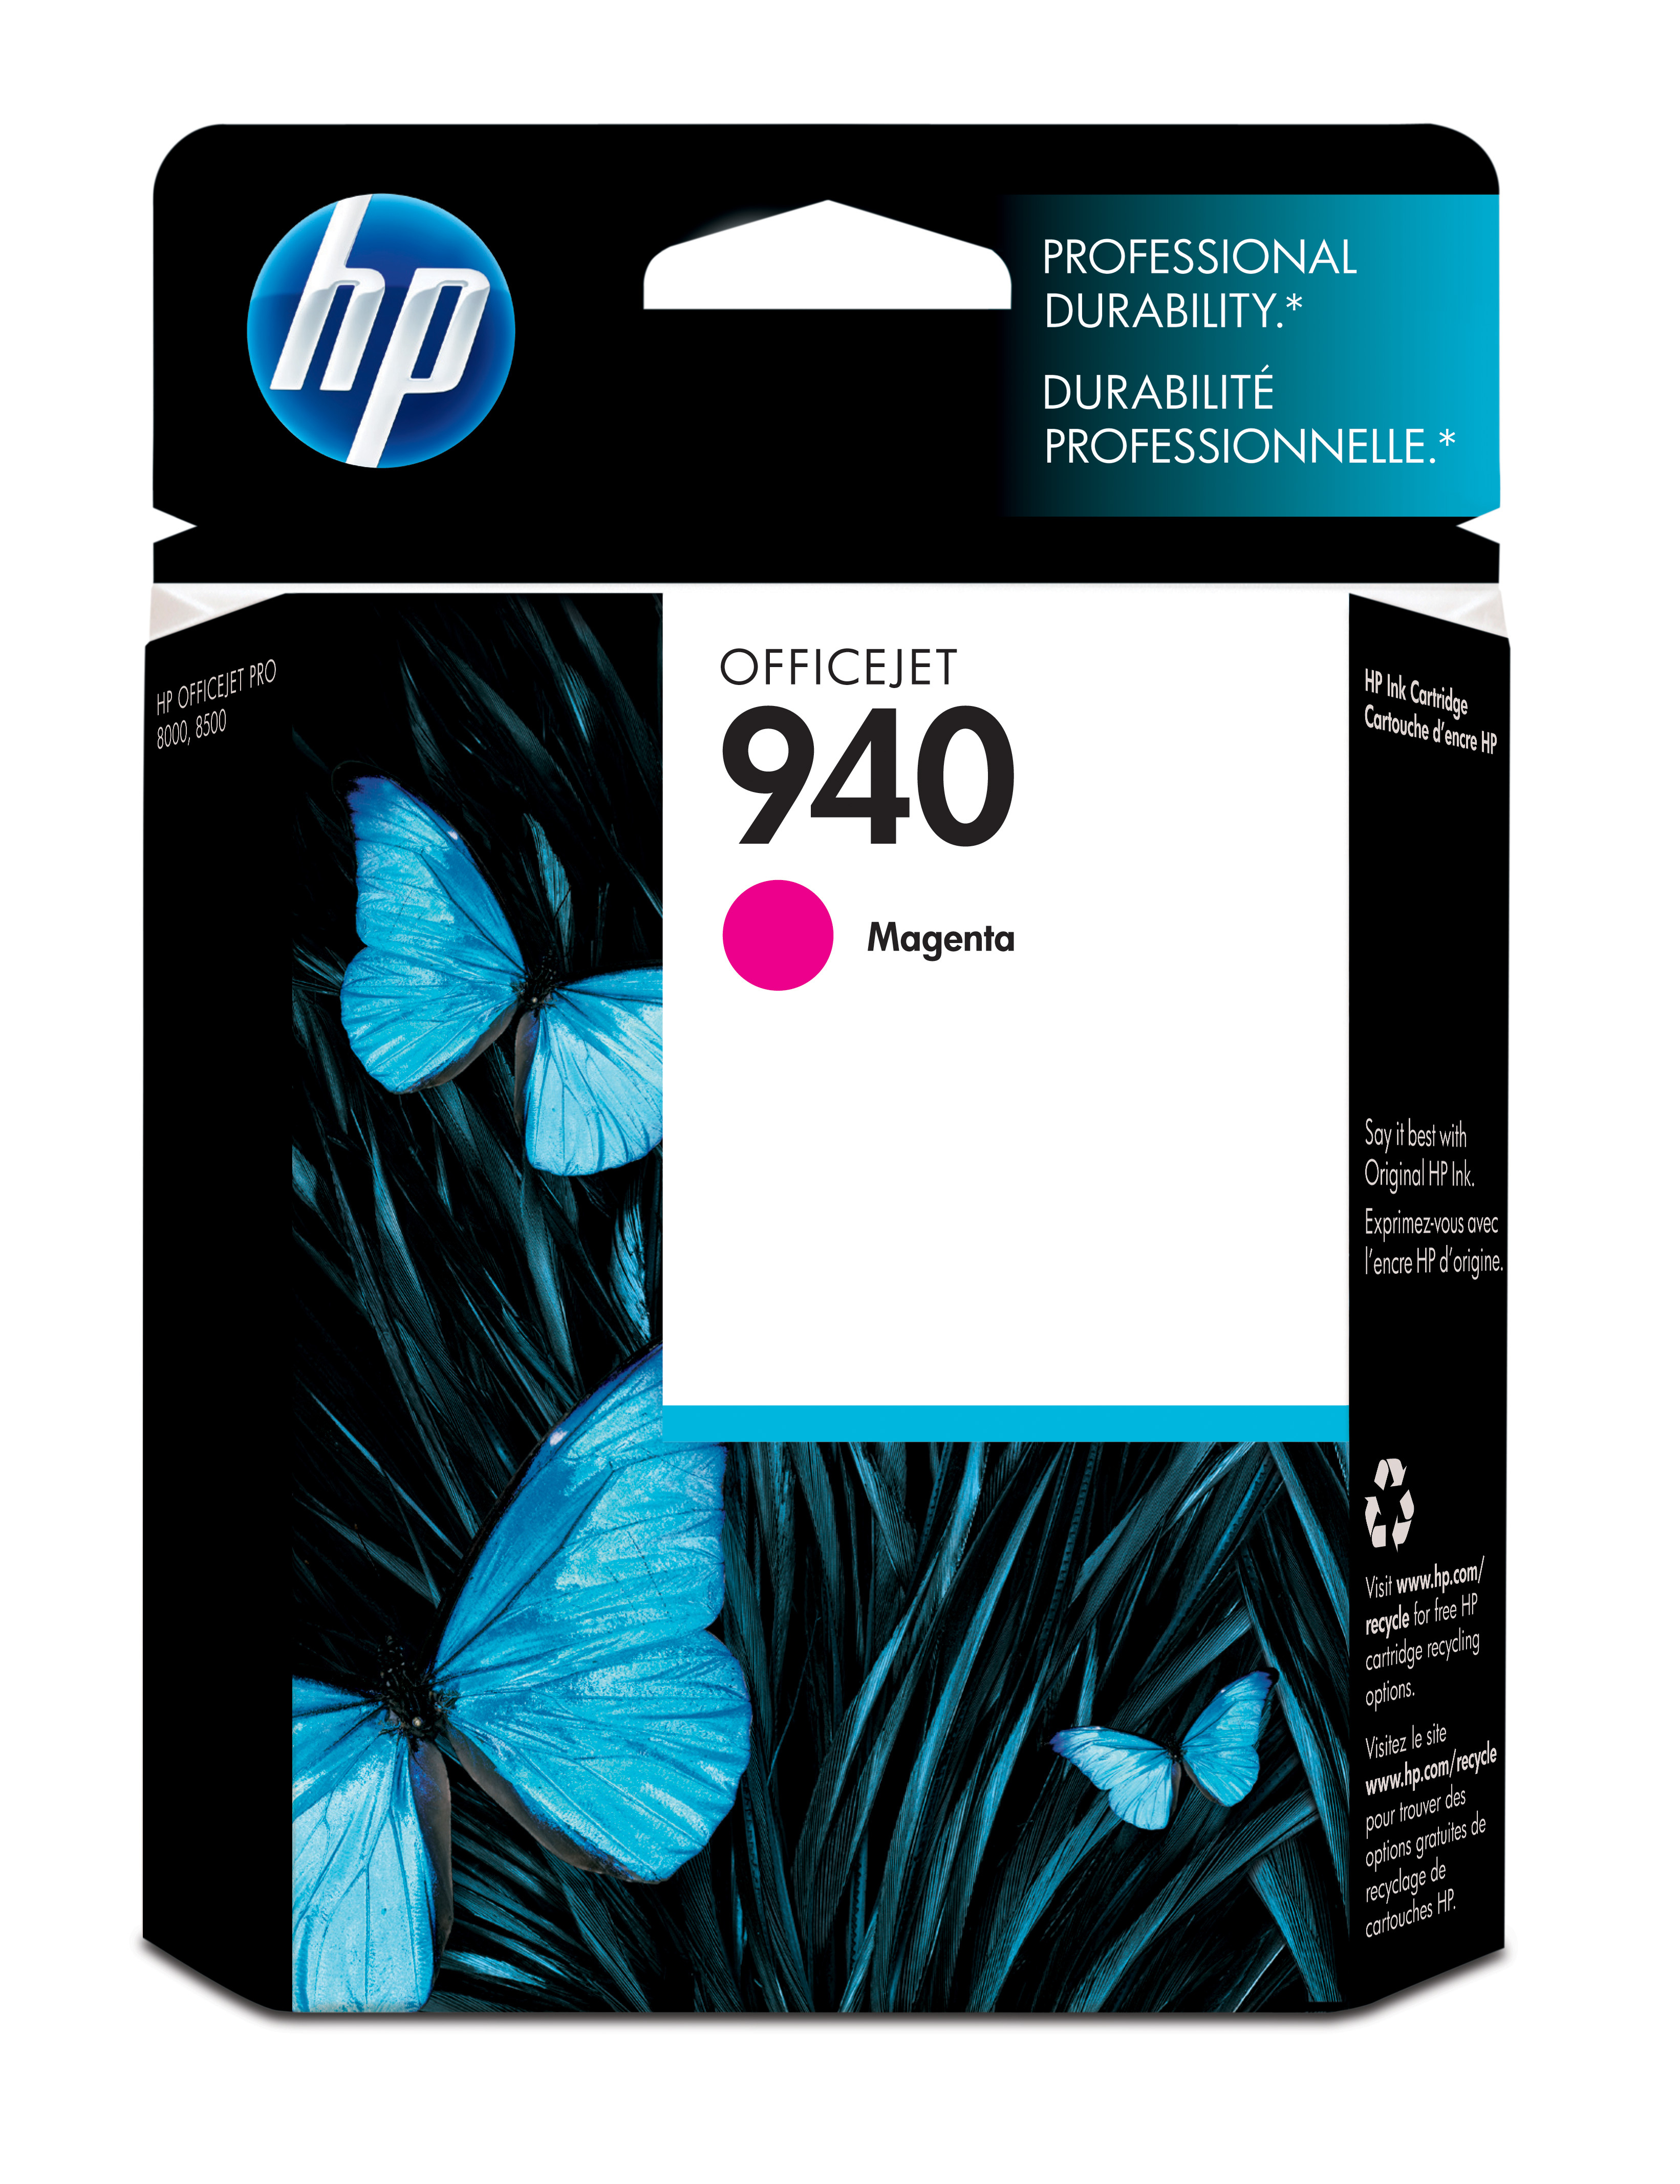 HP 940 Magenta Officejet Ink Cartridge Genuine HP Inkjet